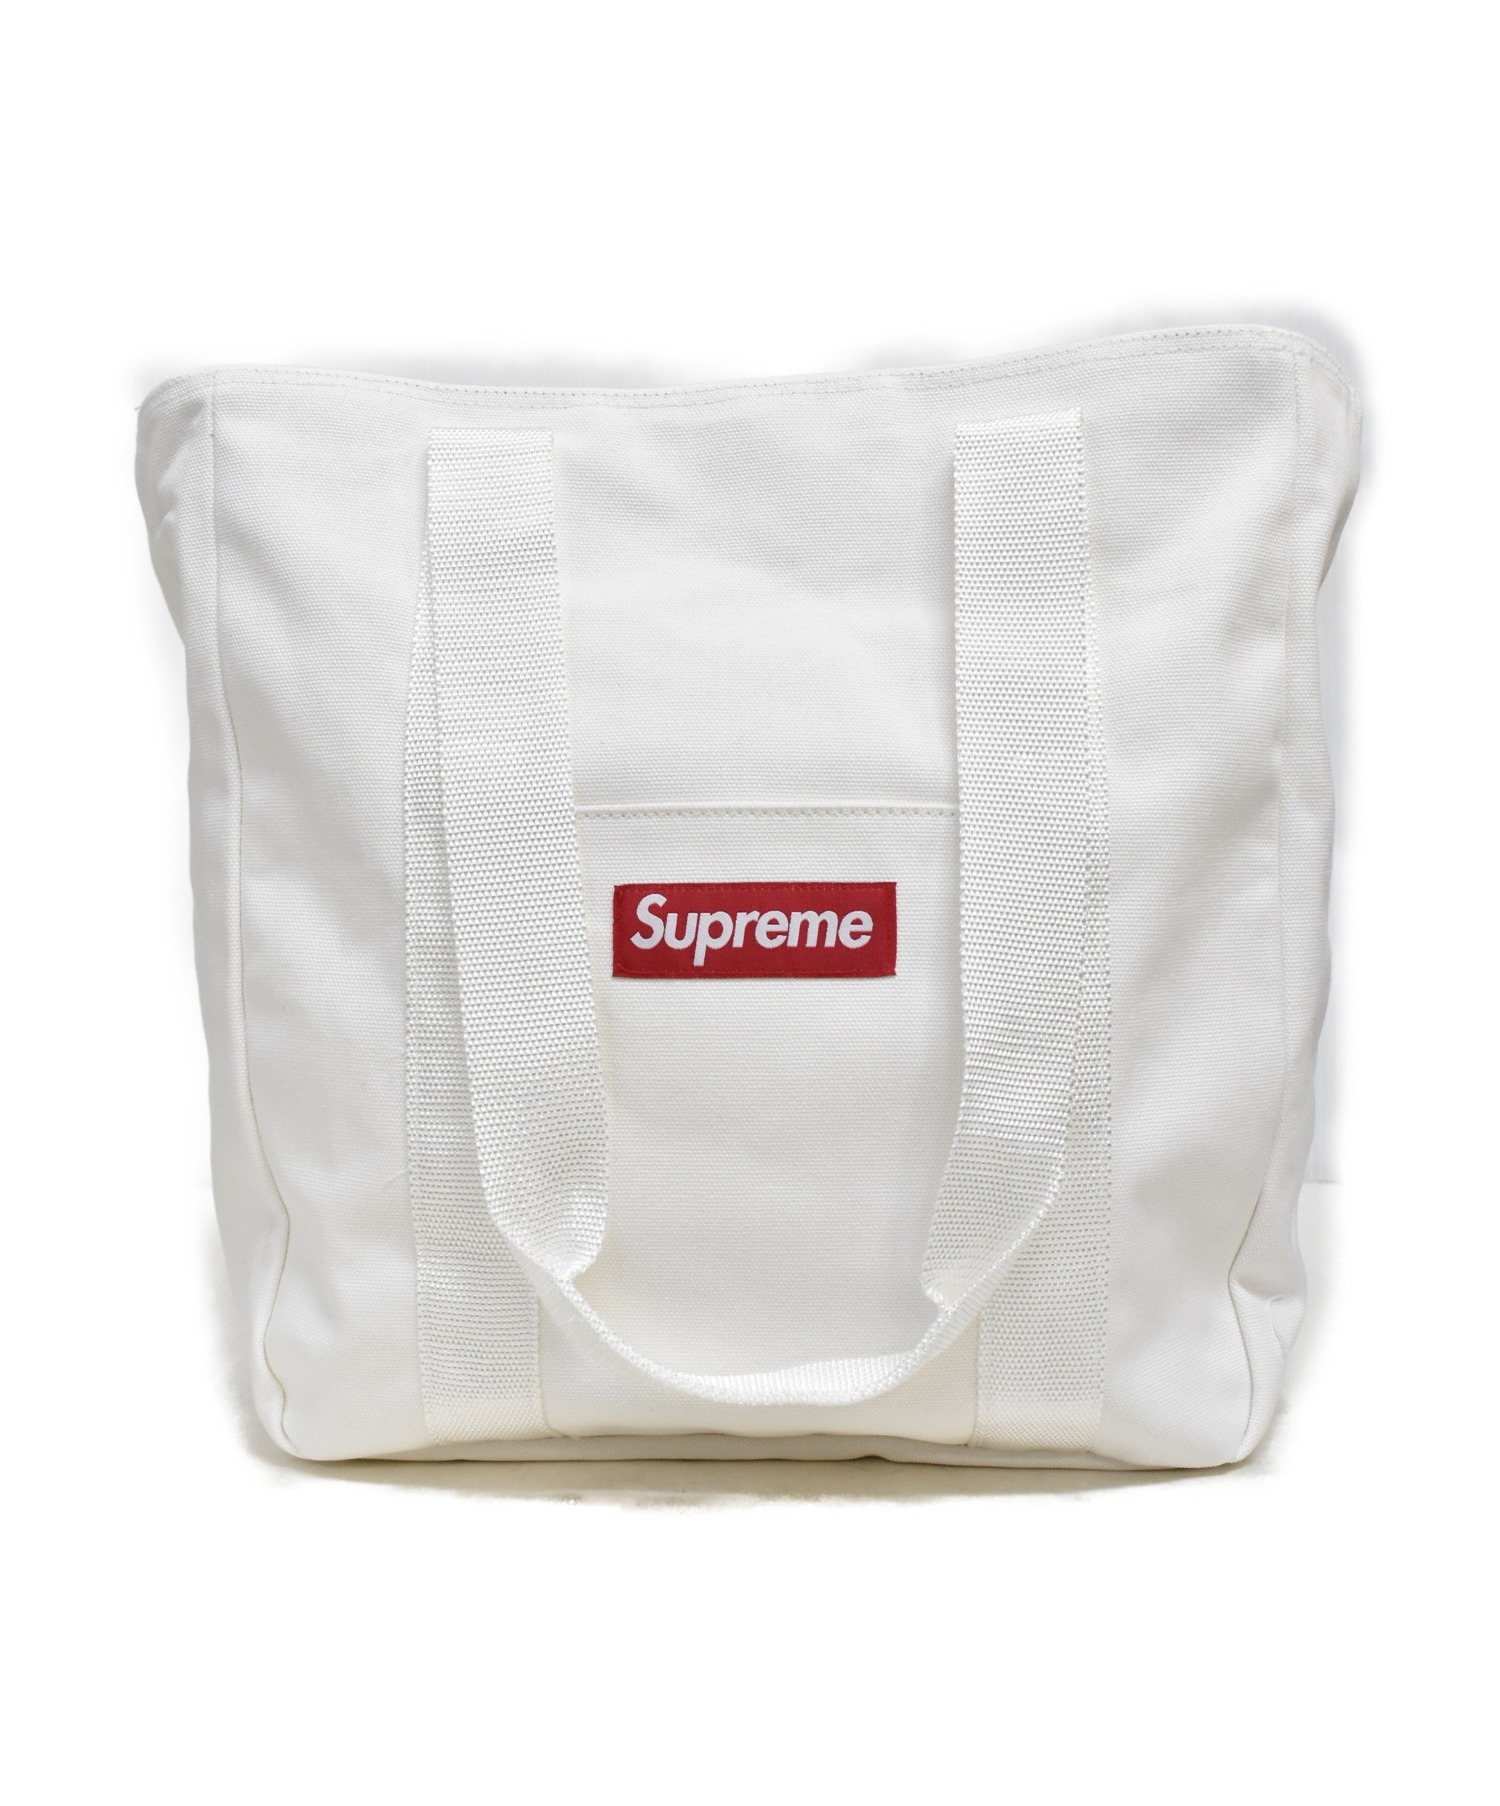 20AW Supreme canvas tote bag